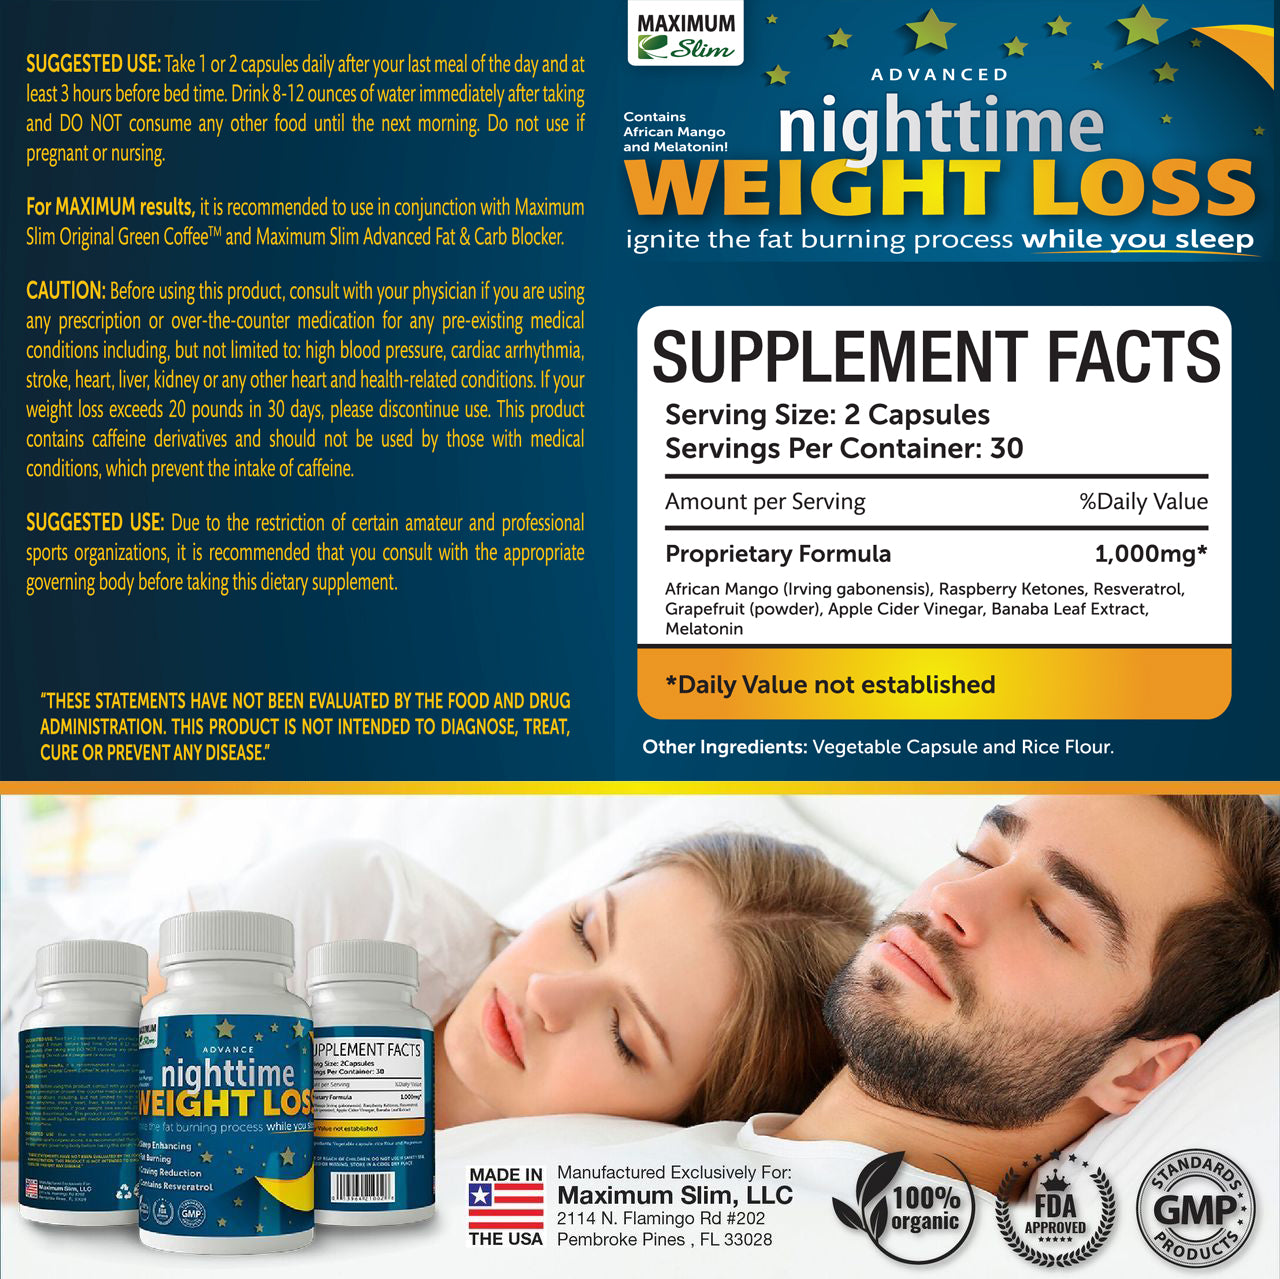 nighttime-weight-loss-label-presentationskr718.jpg